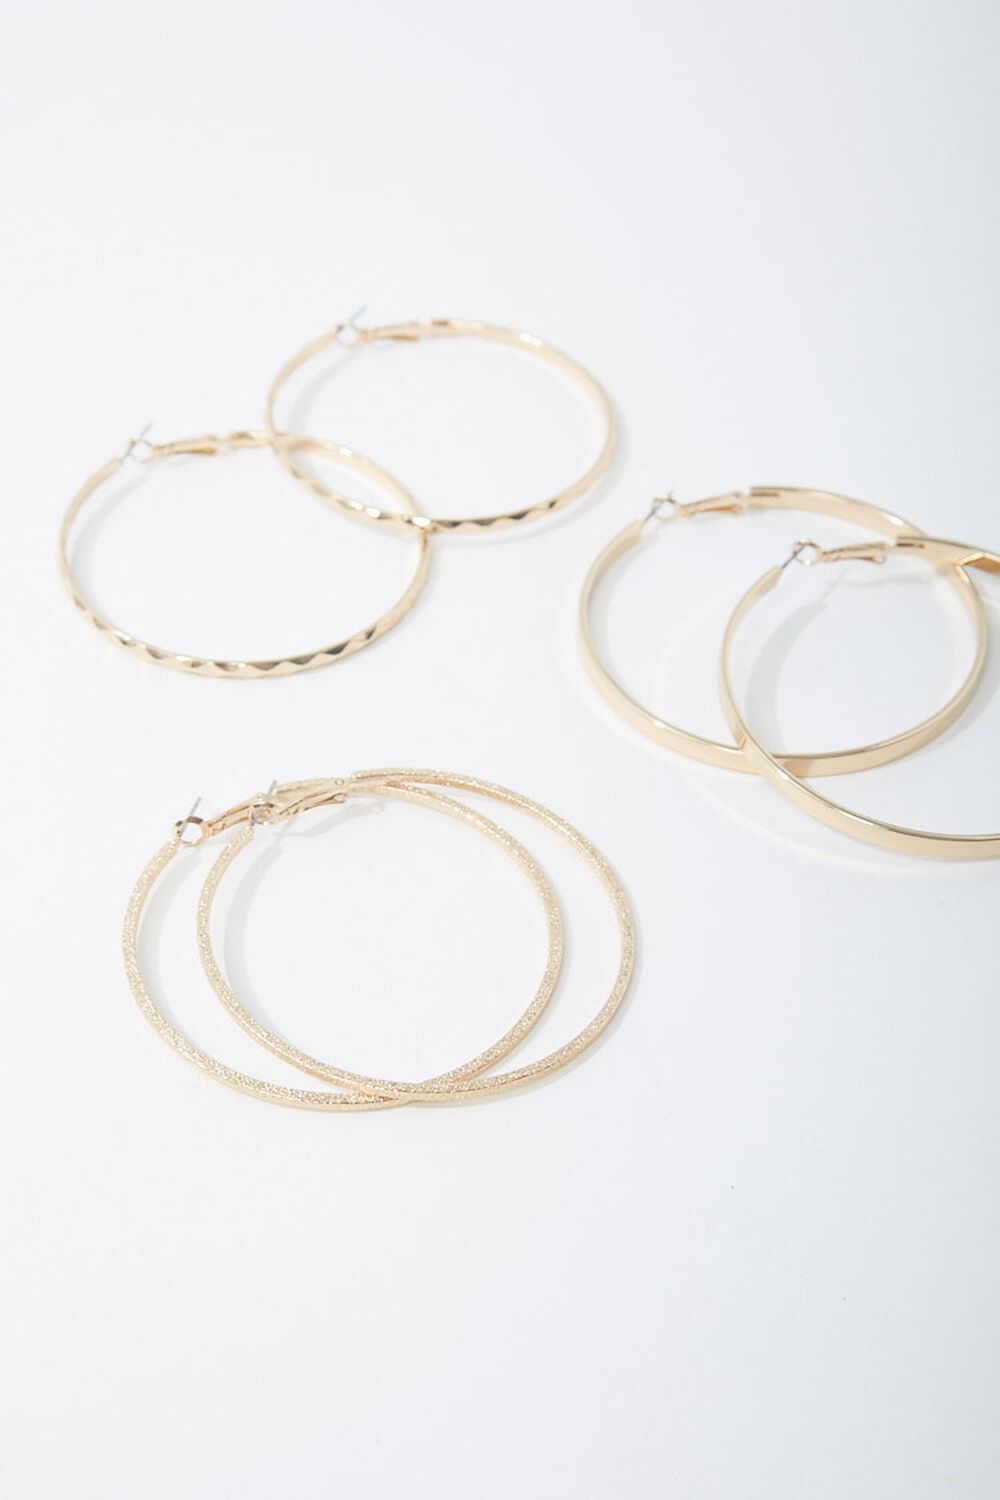 GOLD Assorted Hoop Earring Set, image 1